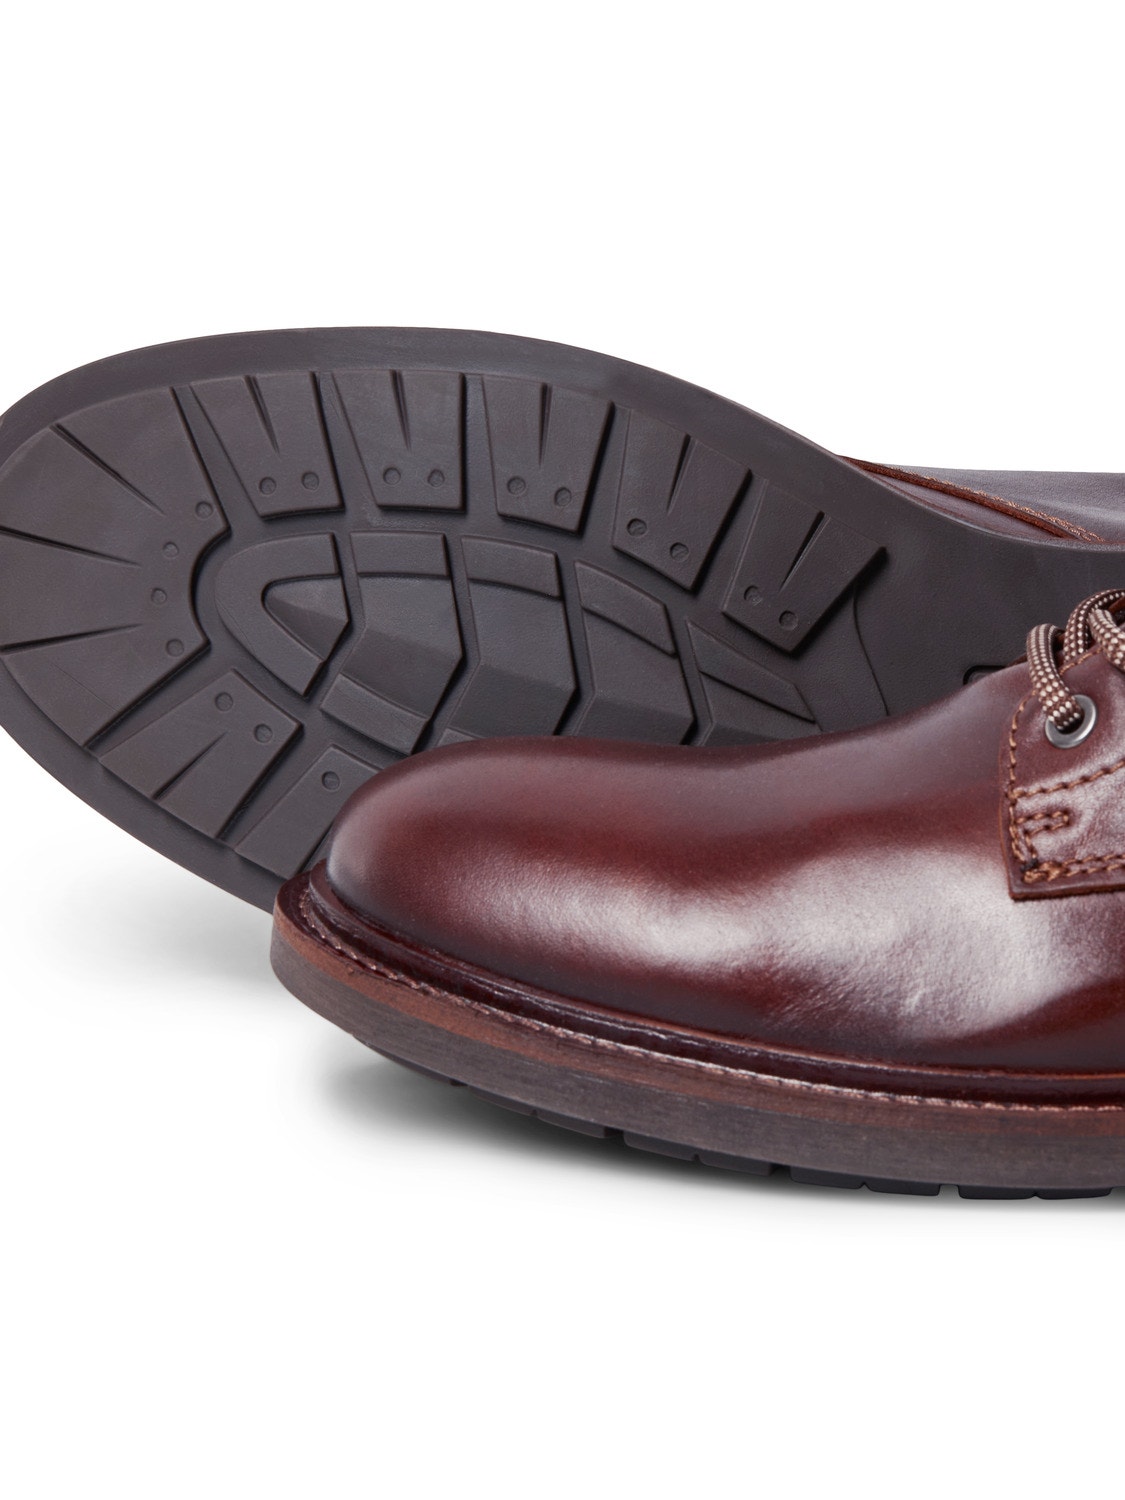 Jack & Jones Leather Boots -Brandy Brown - 12215613